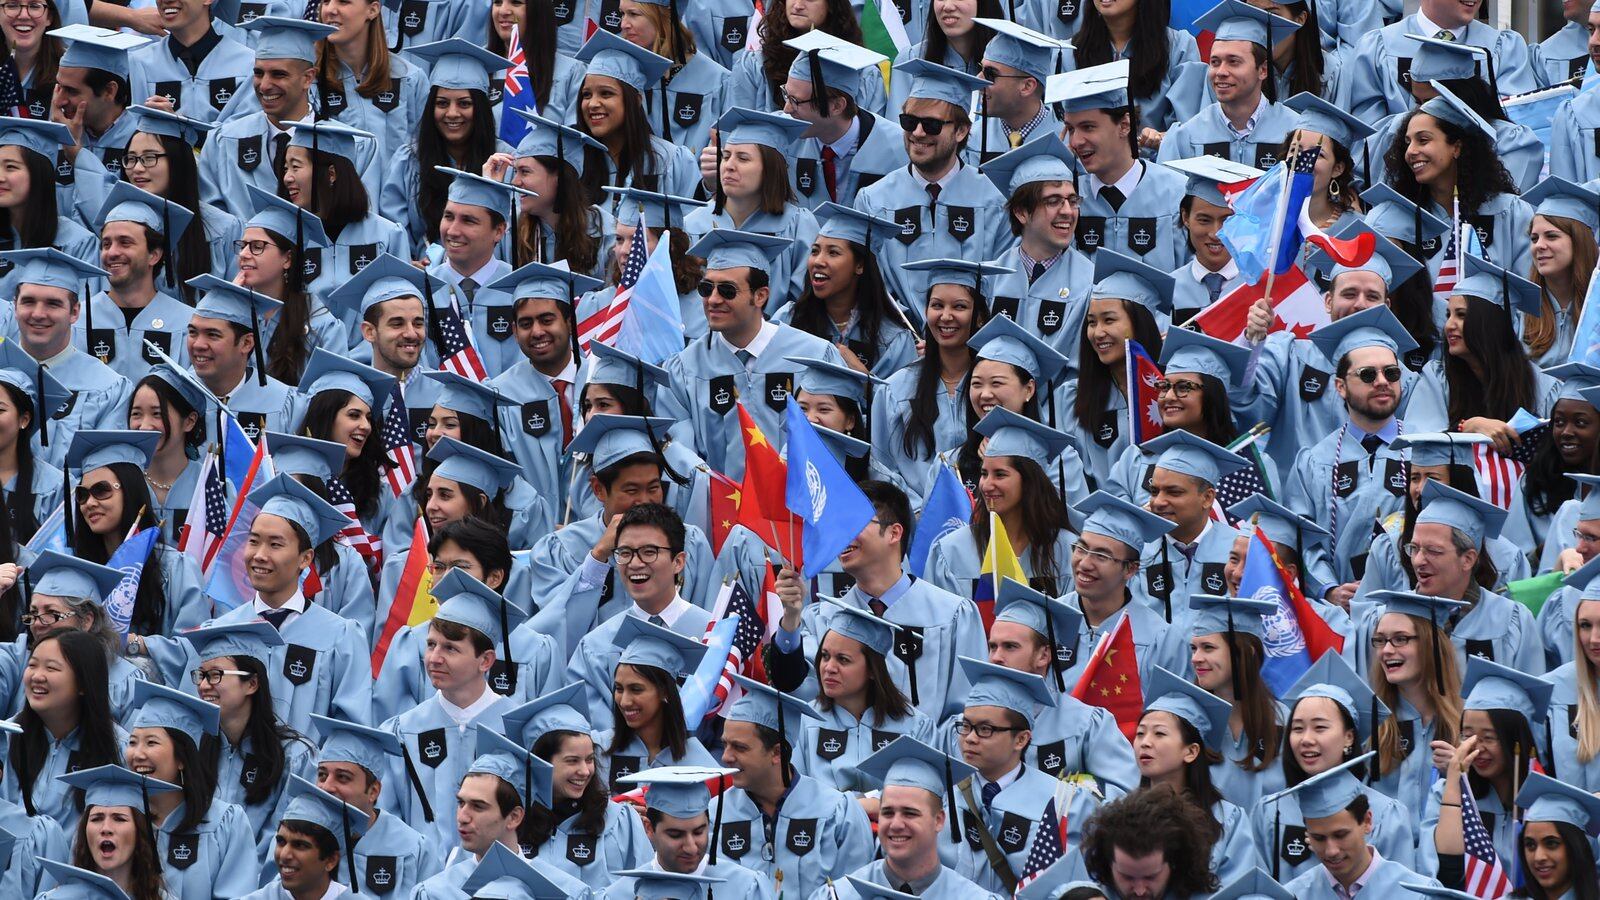 Columbia University graduates wear blue graduation robes and caps.